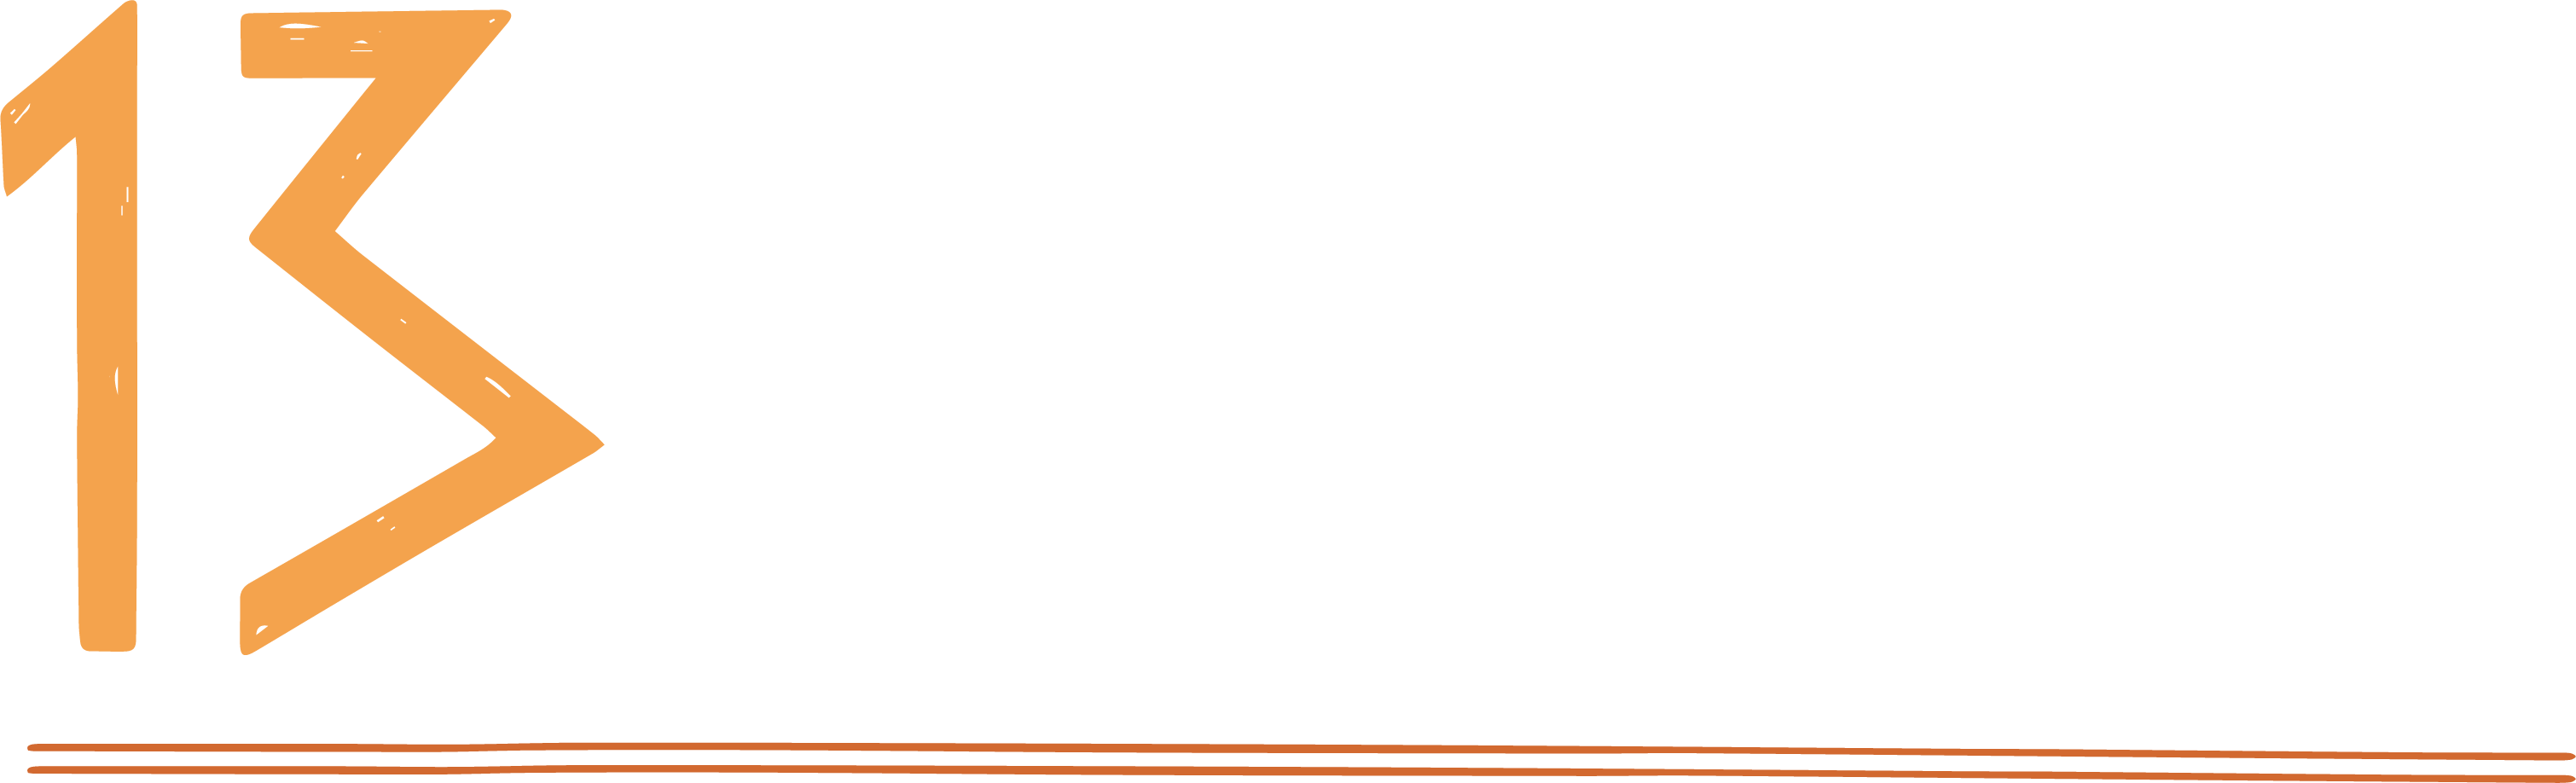 EuCornea Athens Reversed logo with line